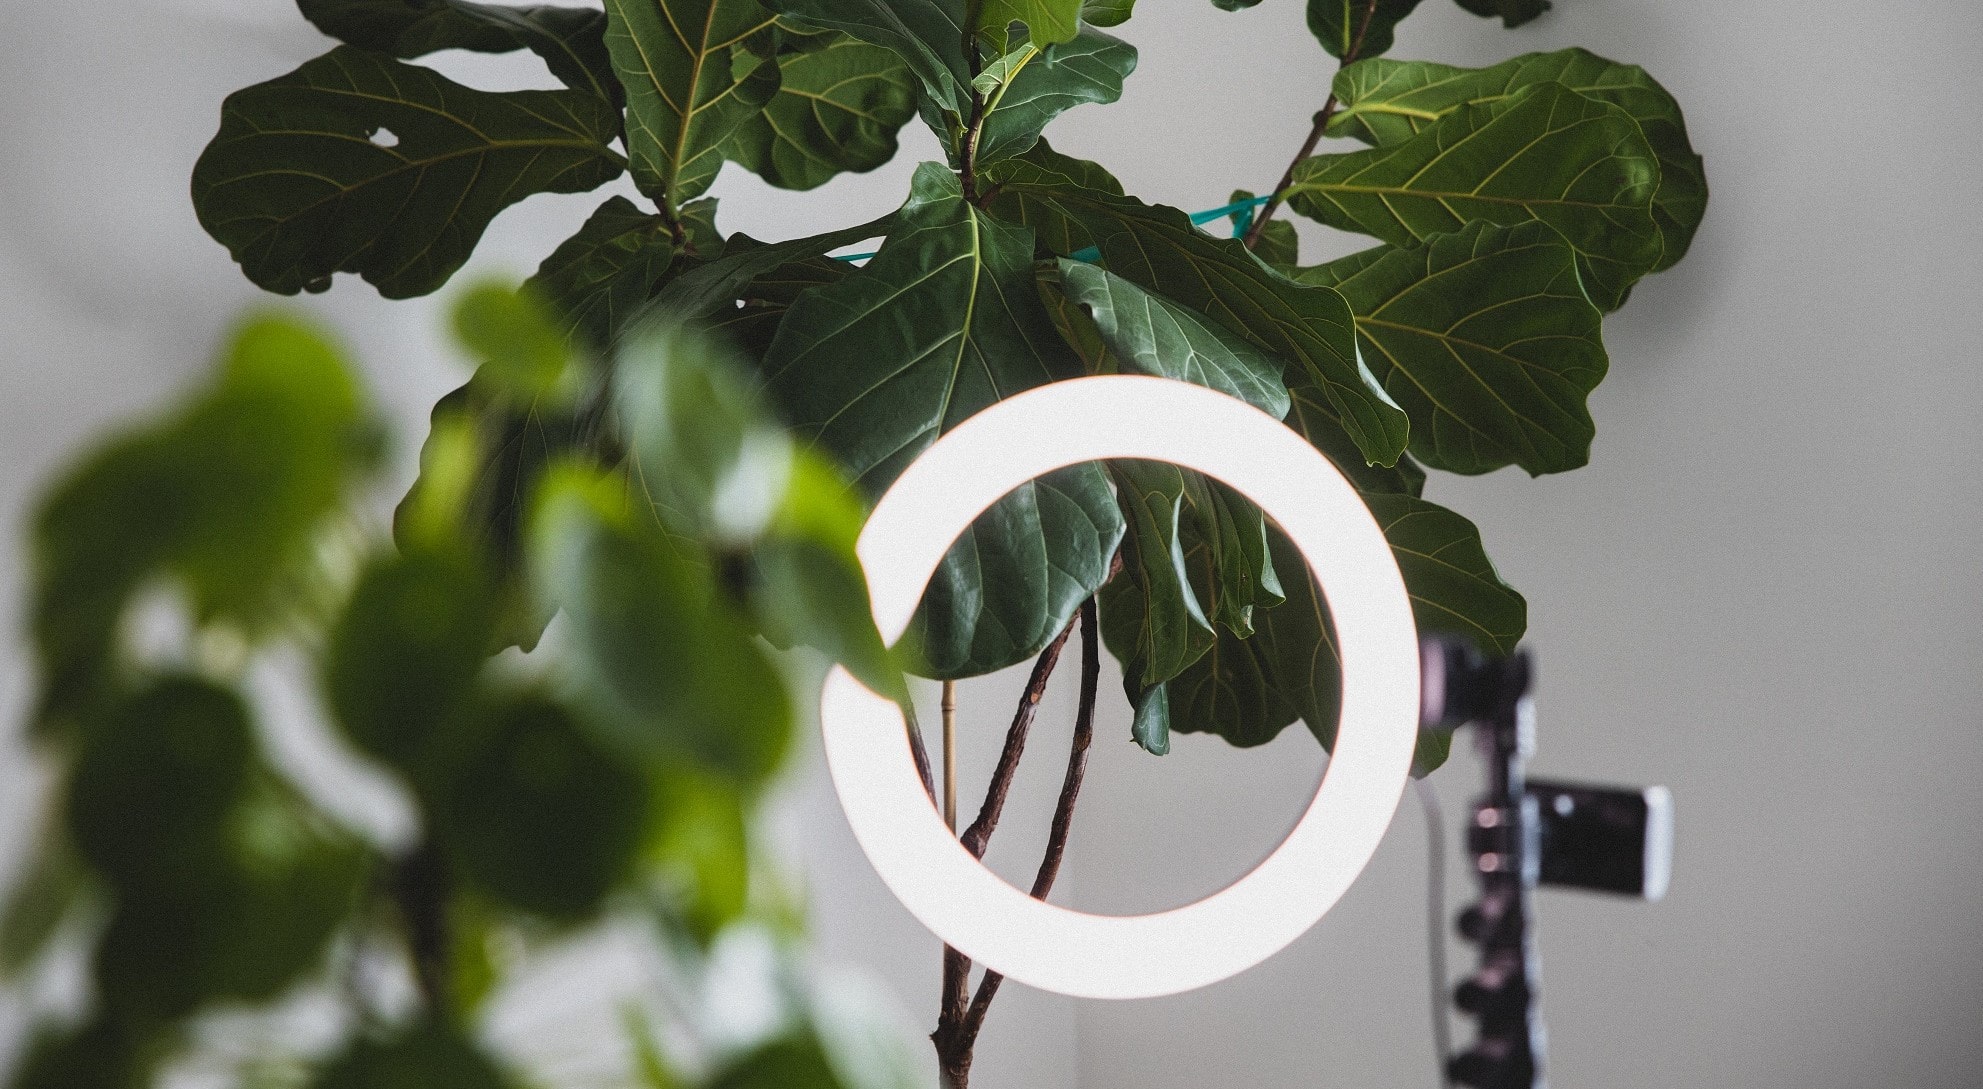 Vanessa Lopes - Instagram Reels - Image de l'article Instagram Reels - Plantes vertes et ring light